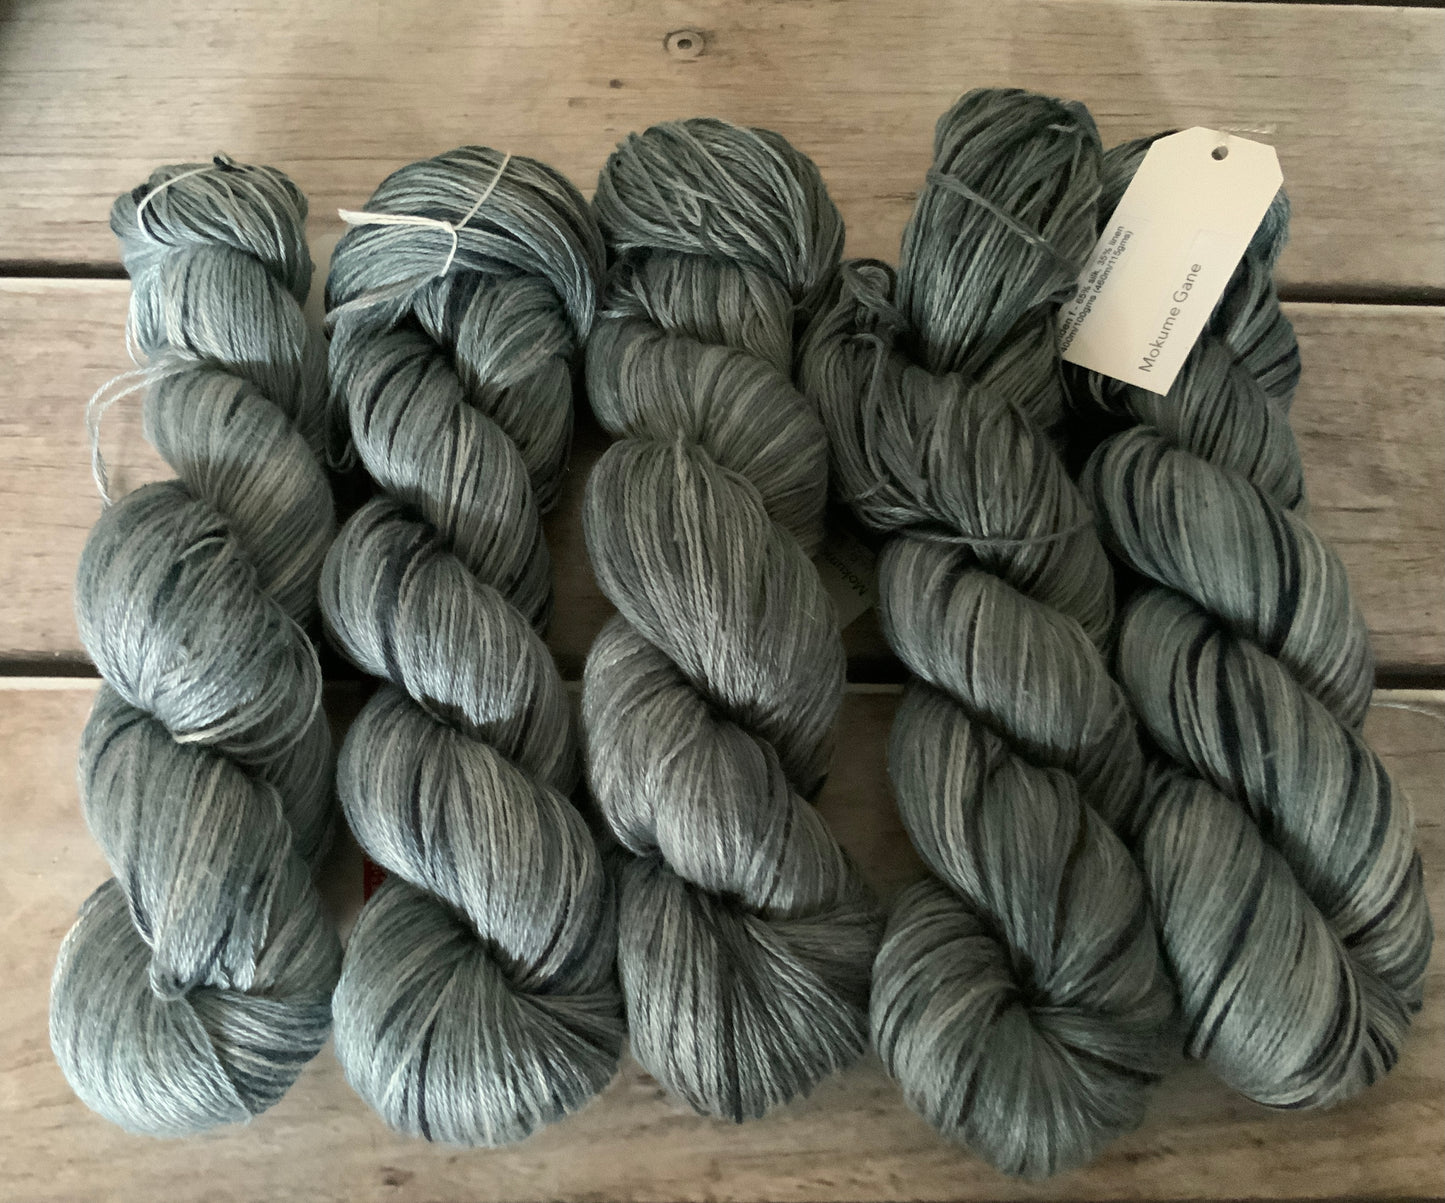 Mokume Gane on Linden - 4 ply silk and linen yarn